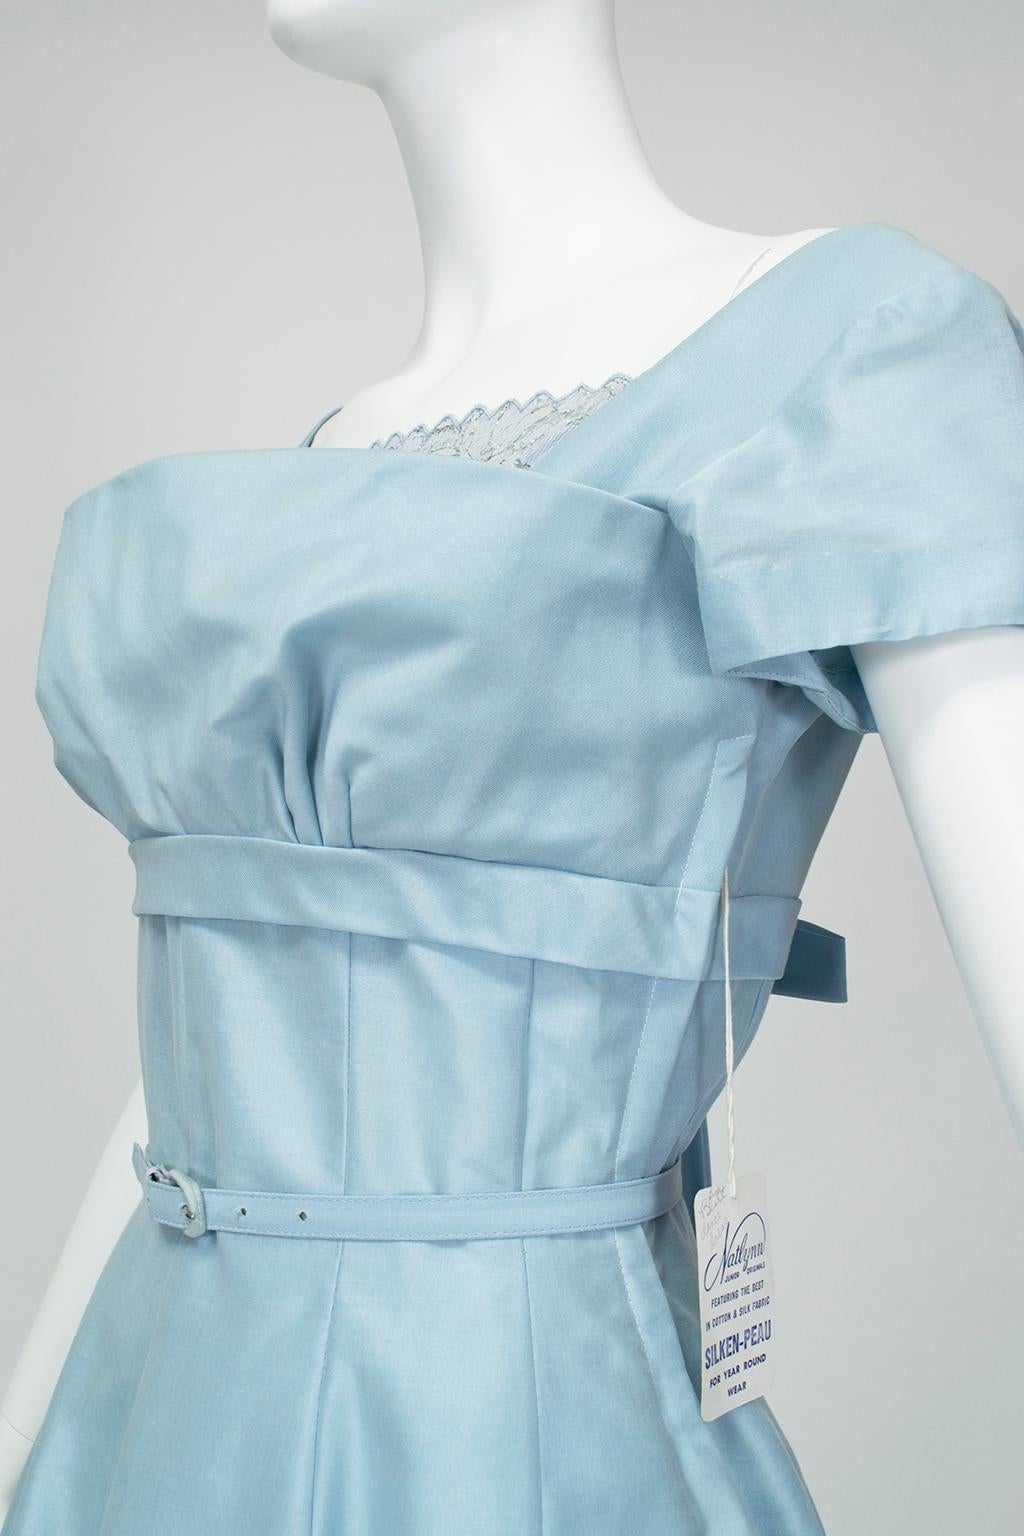 New Powder Blue Petal Shelf Bust Honeymoon Party Dress w Crinoline – M, 1953 For Sale 3